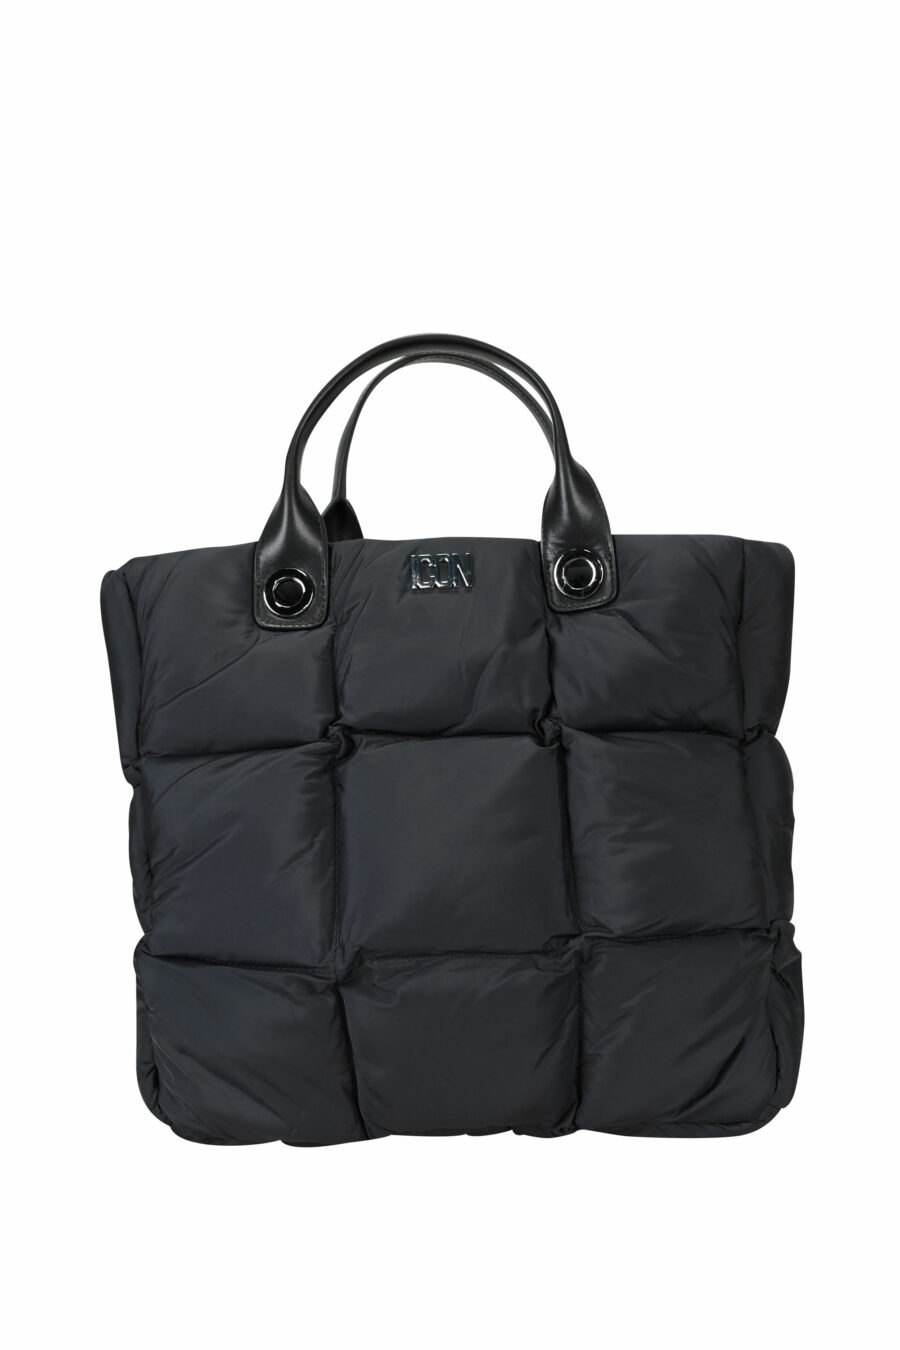 Black shopper bag with metal logo - 8055777276341